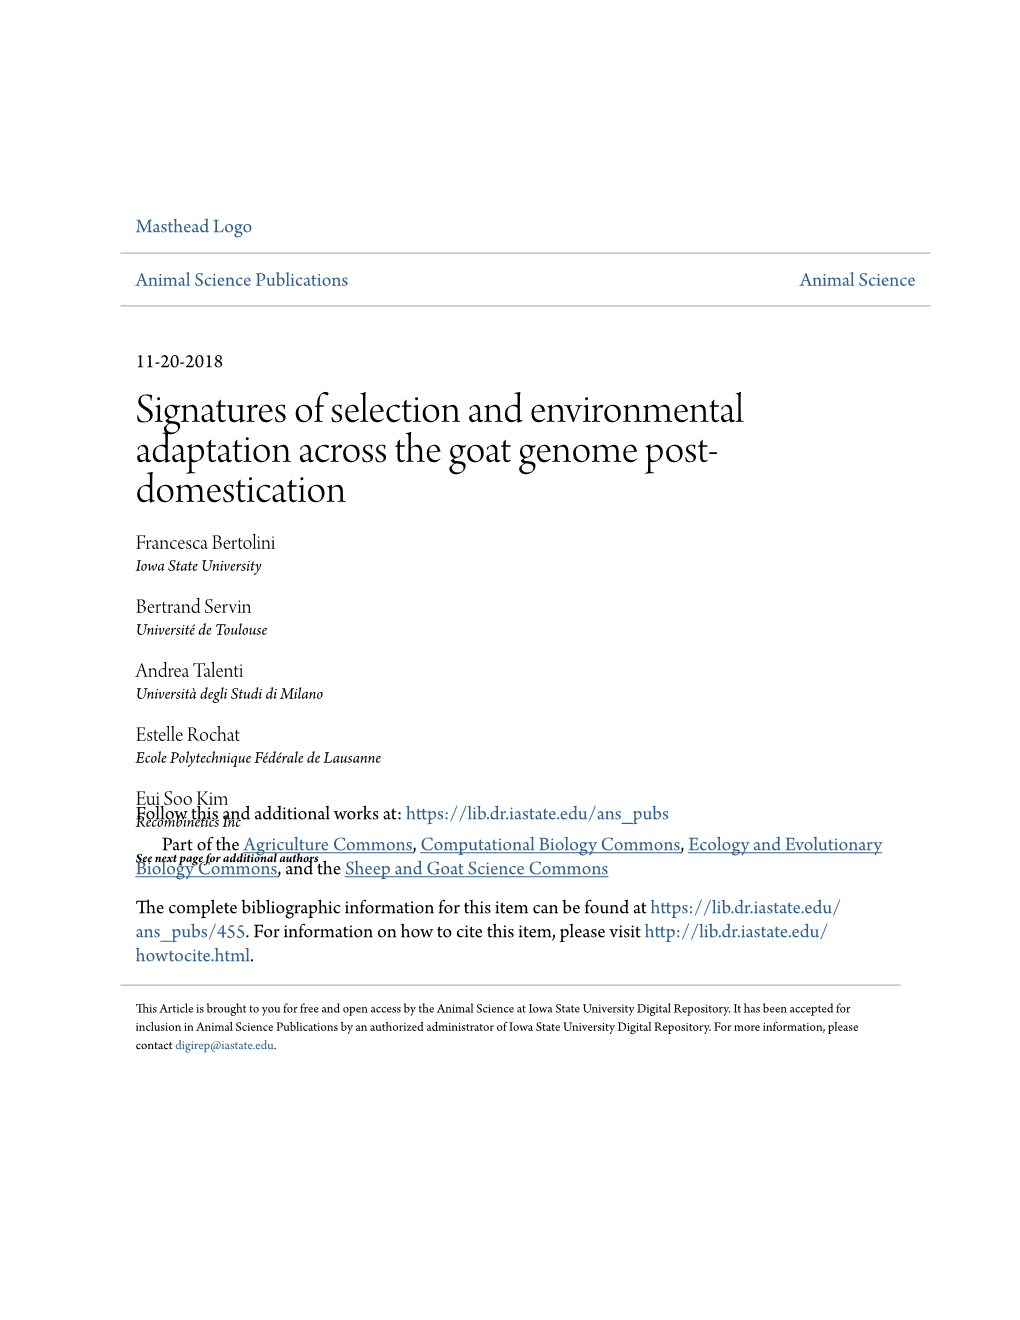 Signatures of Selection and Environmental Adaptation Across the Goat Genome Post- Domestication Francesca Bertolini Iowa State University